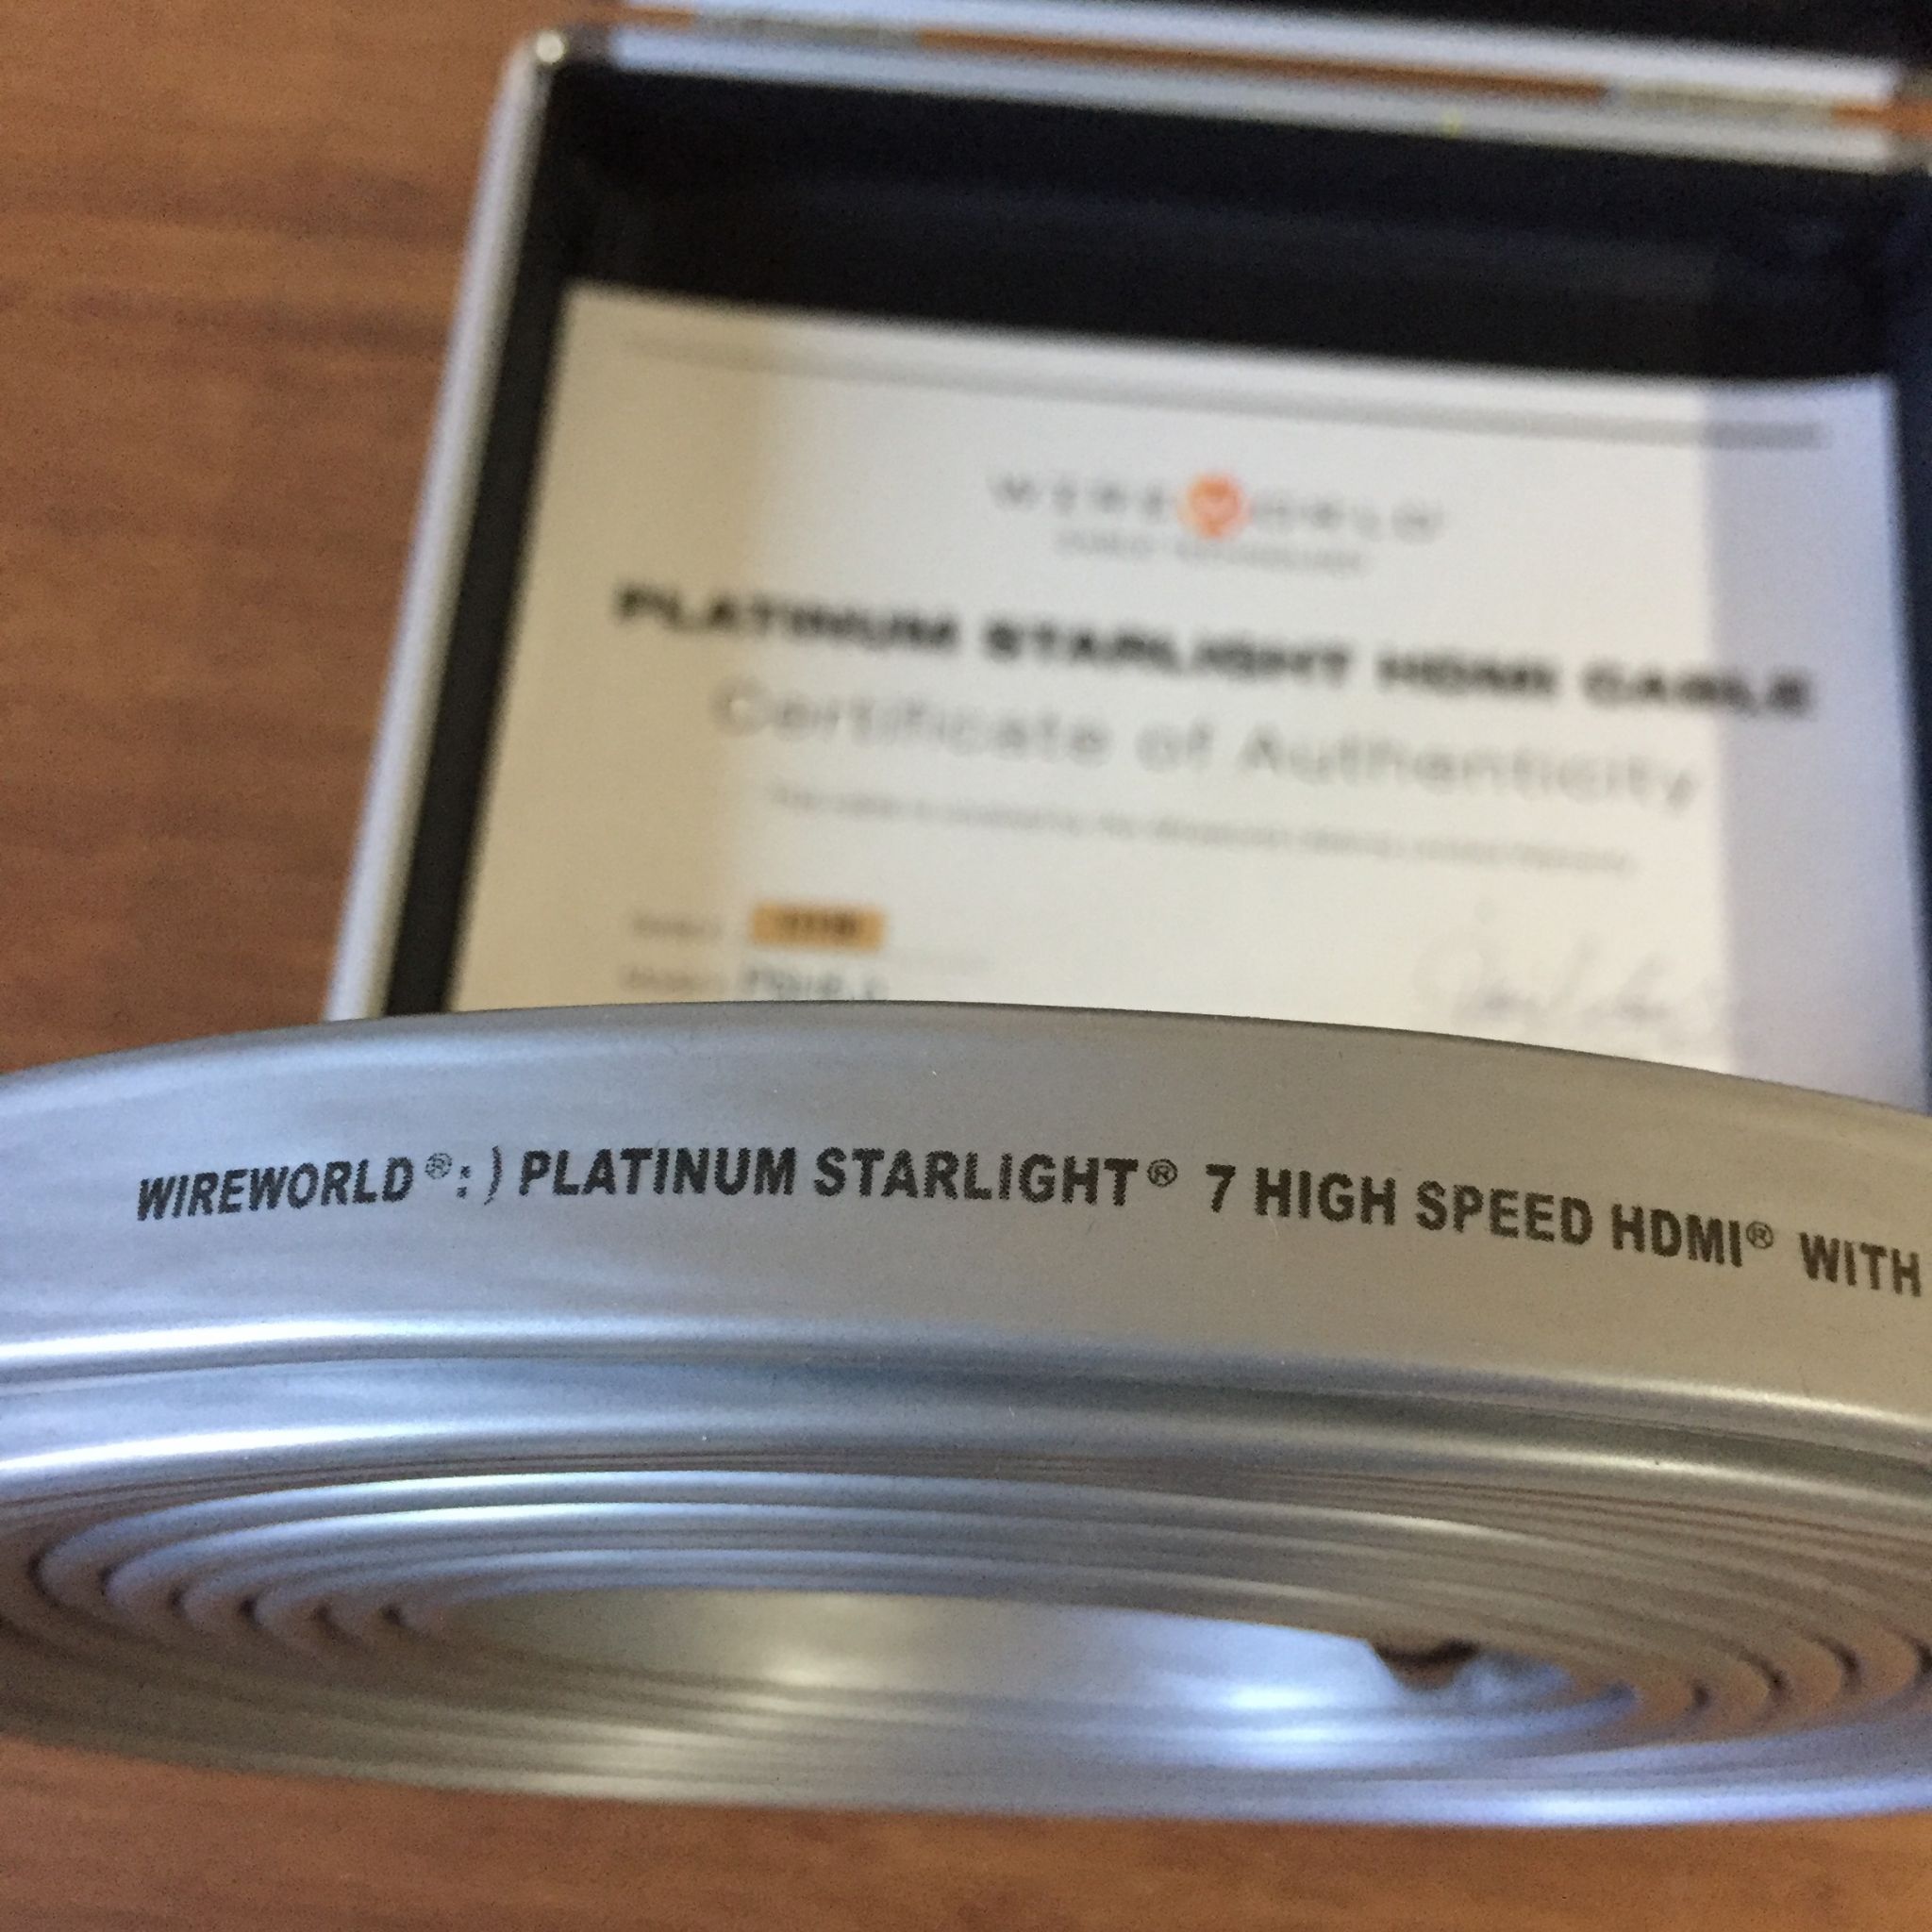 wireworld platinum starlight 7 hdmi review